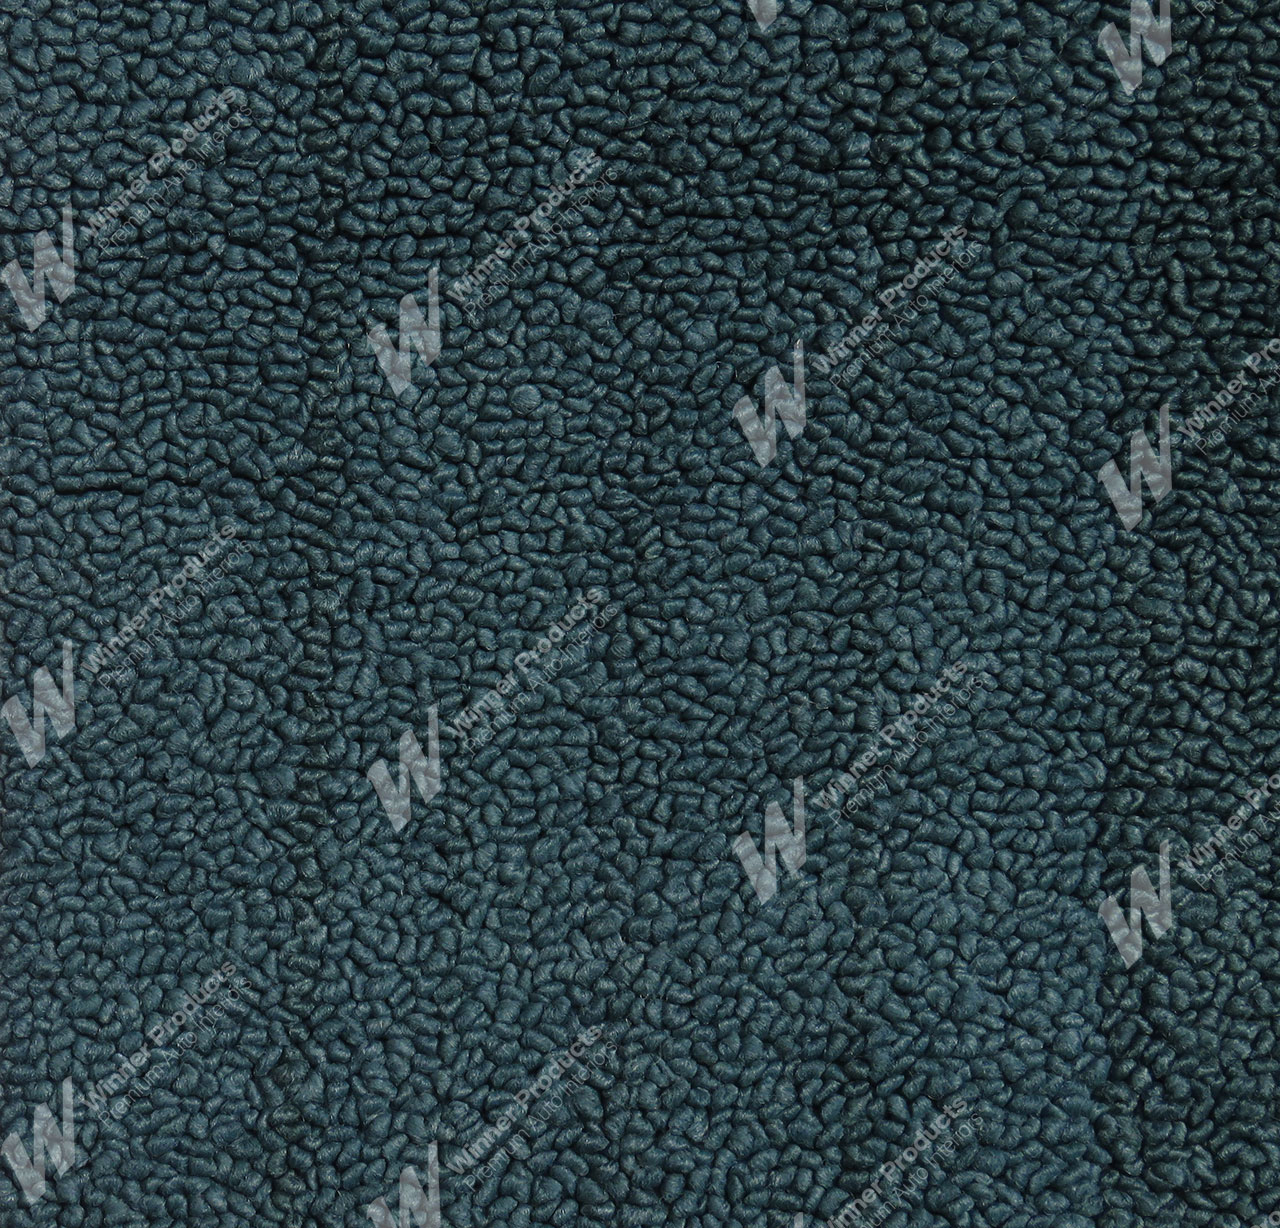 Holden Premier HG Premier Wagon 13R Turquoise Mist Carpet (Image 1 of 1)